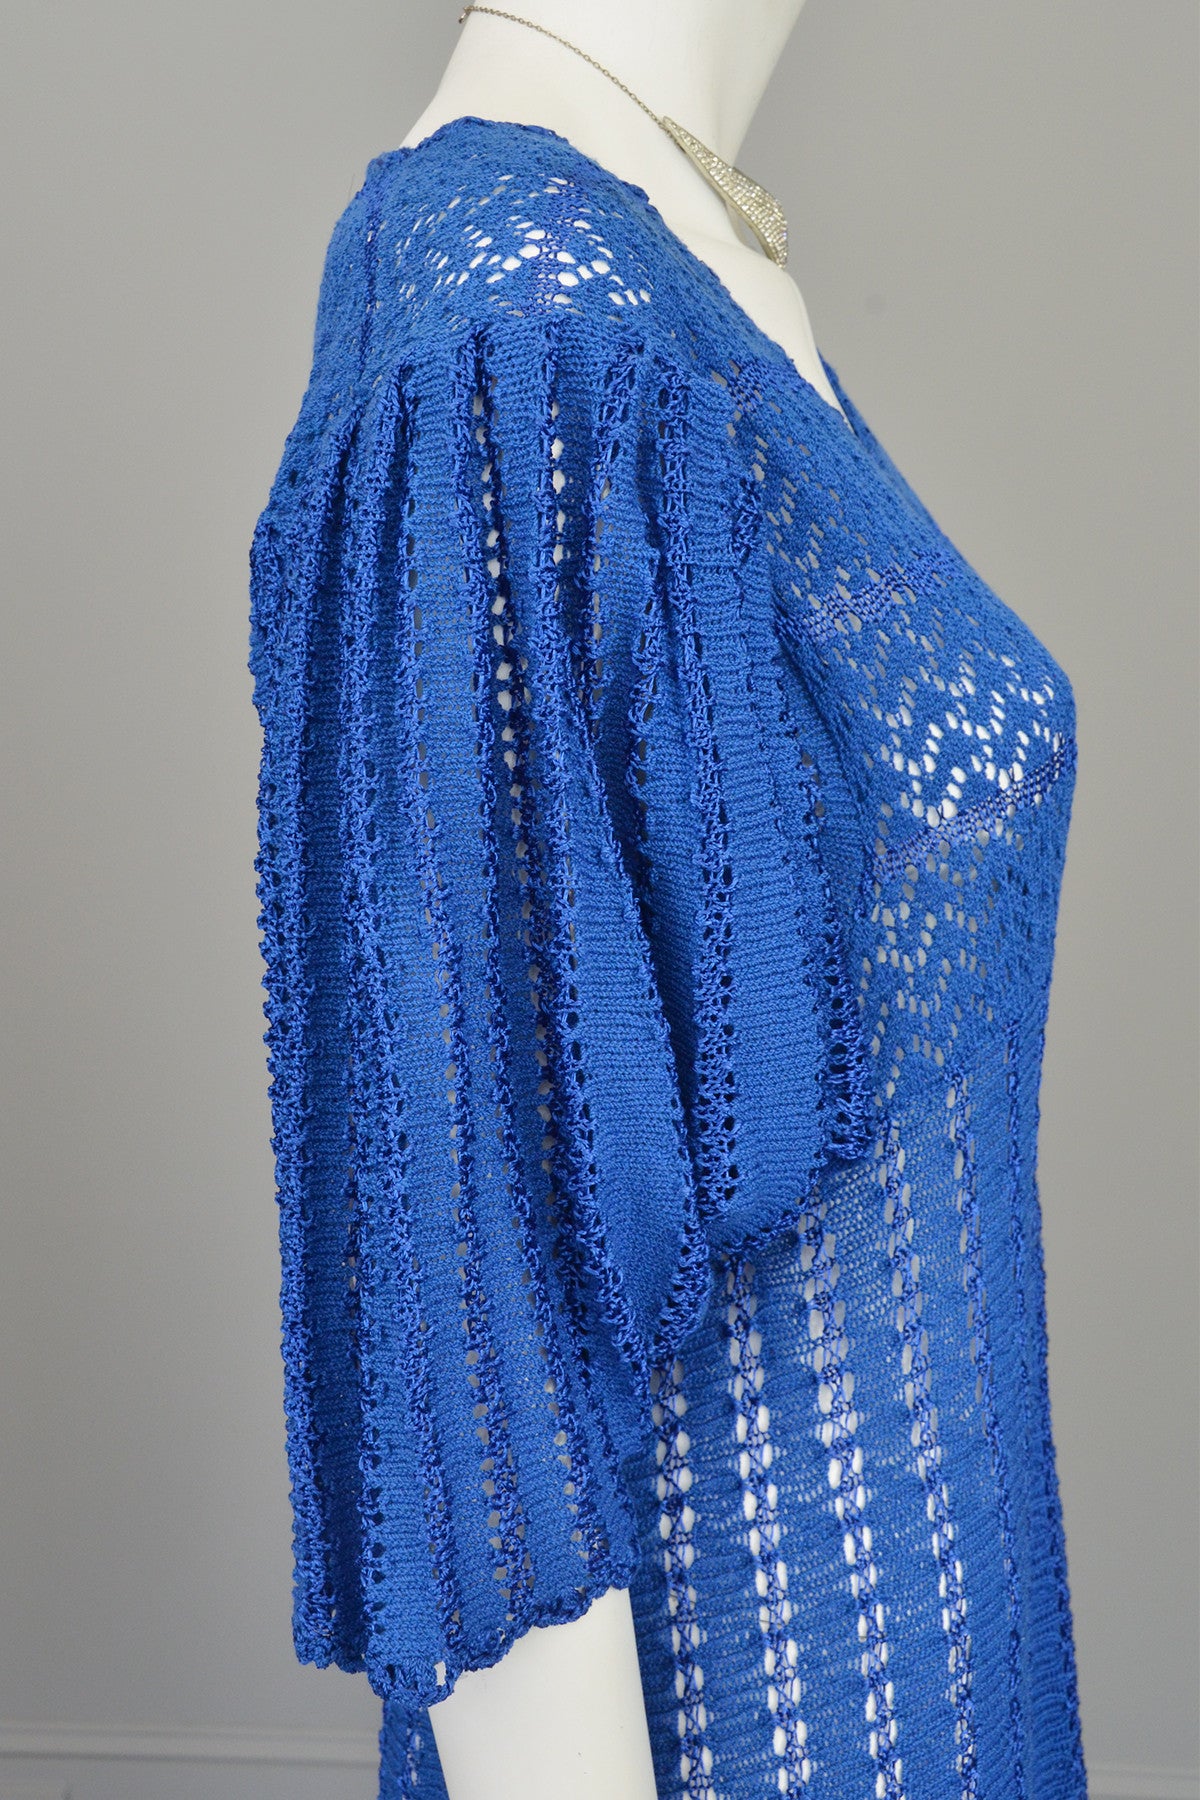 1970s Vibrant Blue Knit Crochet Dress Draping Angel Sleeves